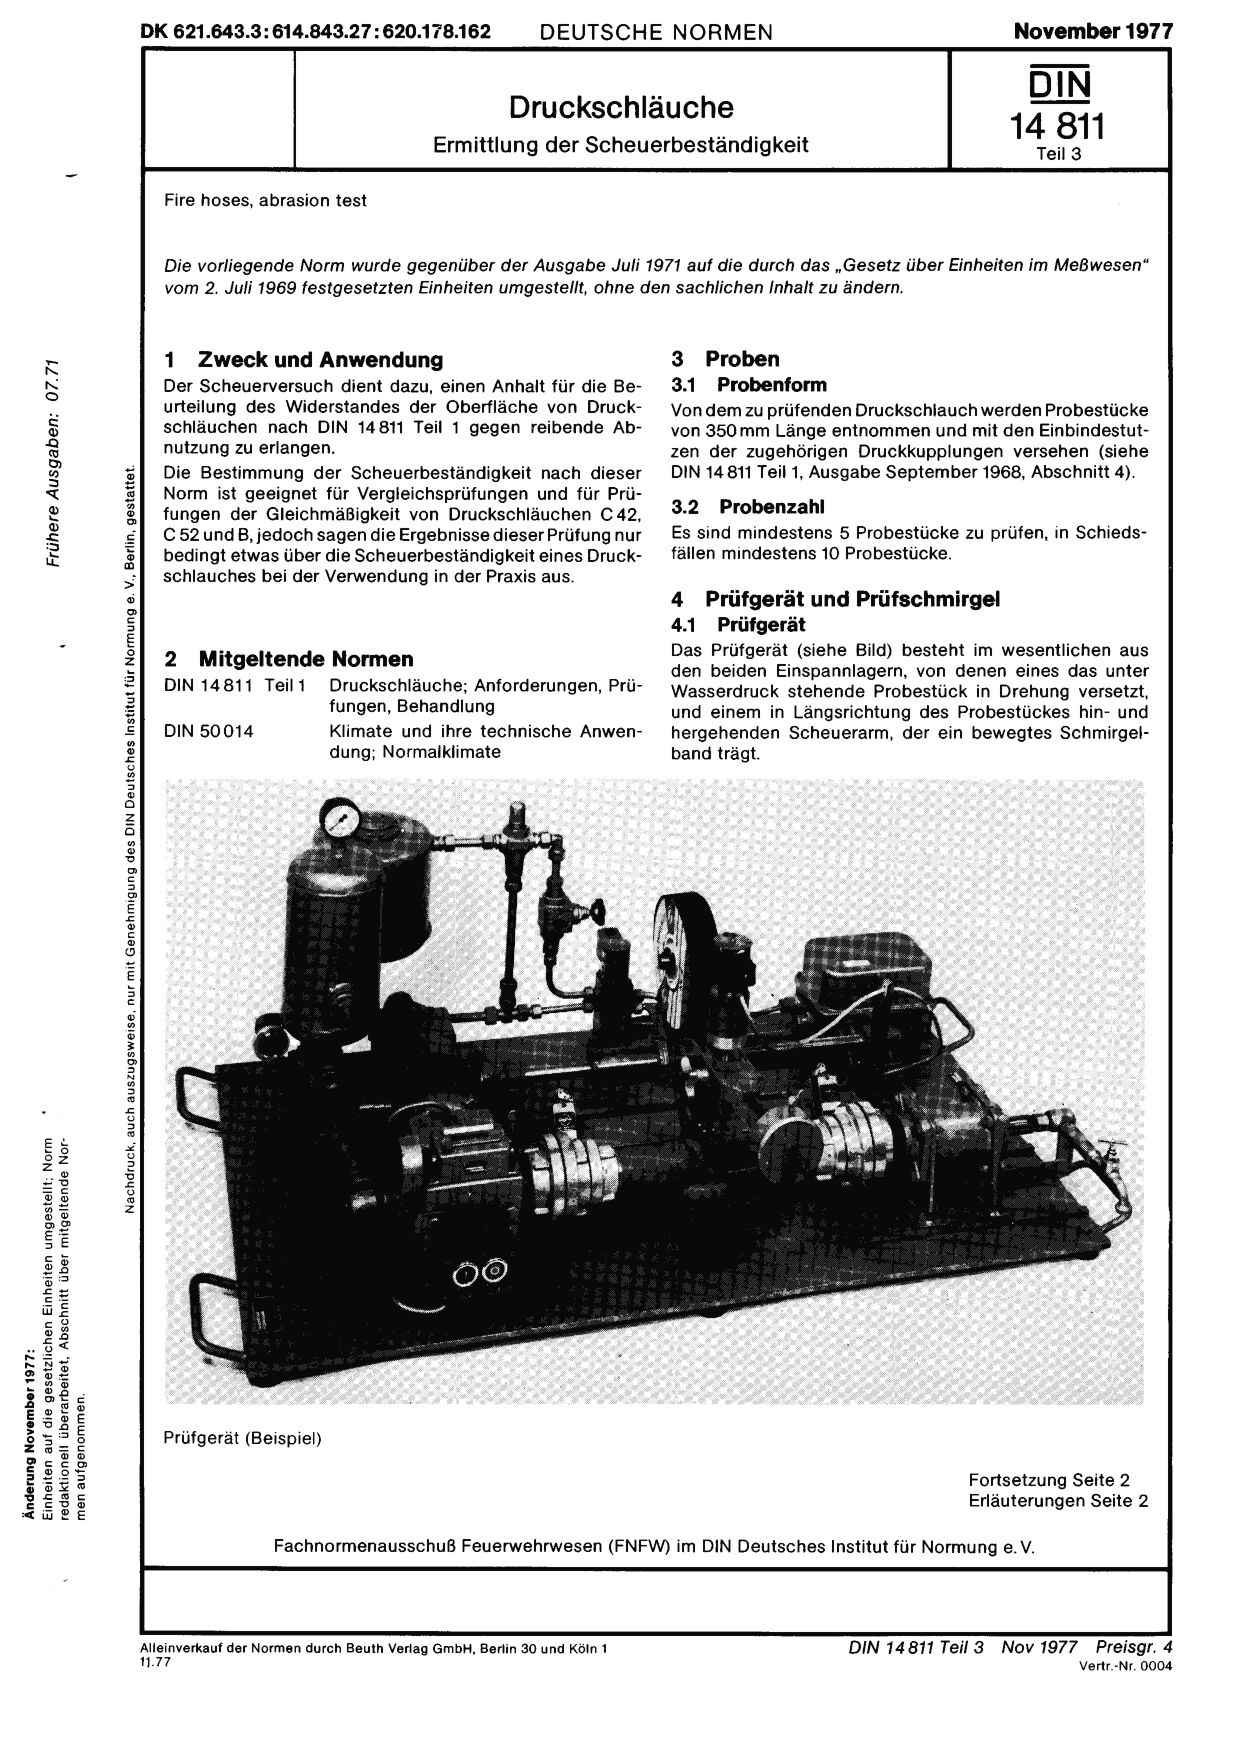 DIN 14811-3:1977封面图